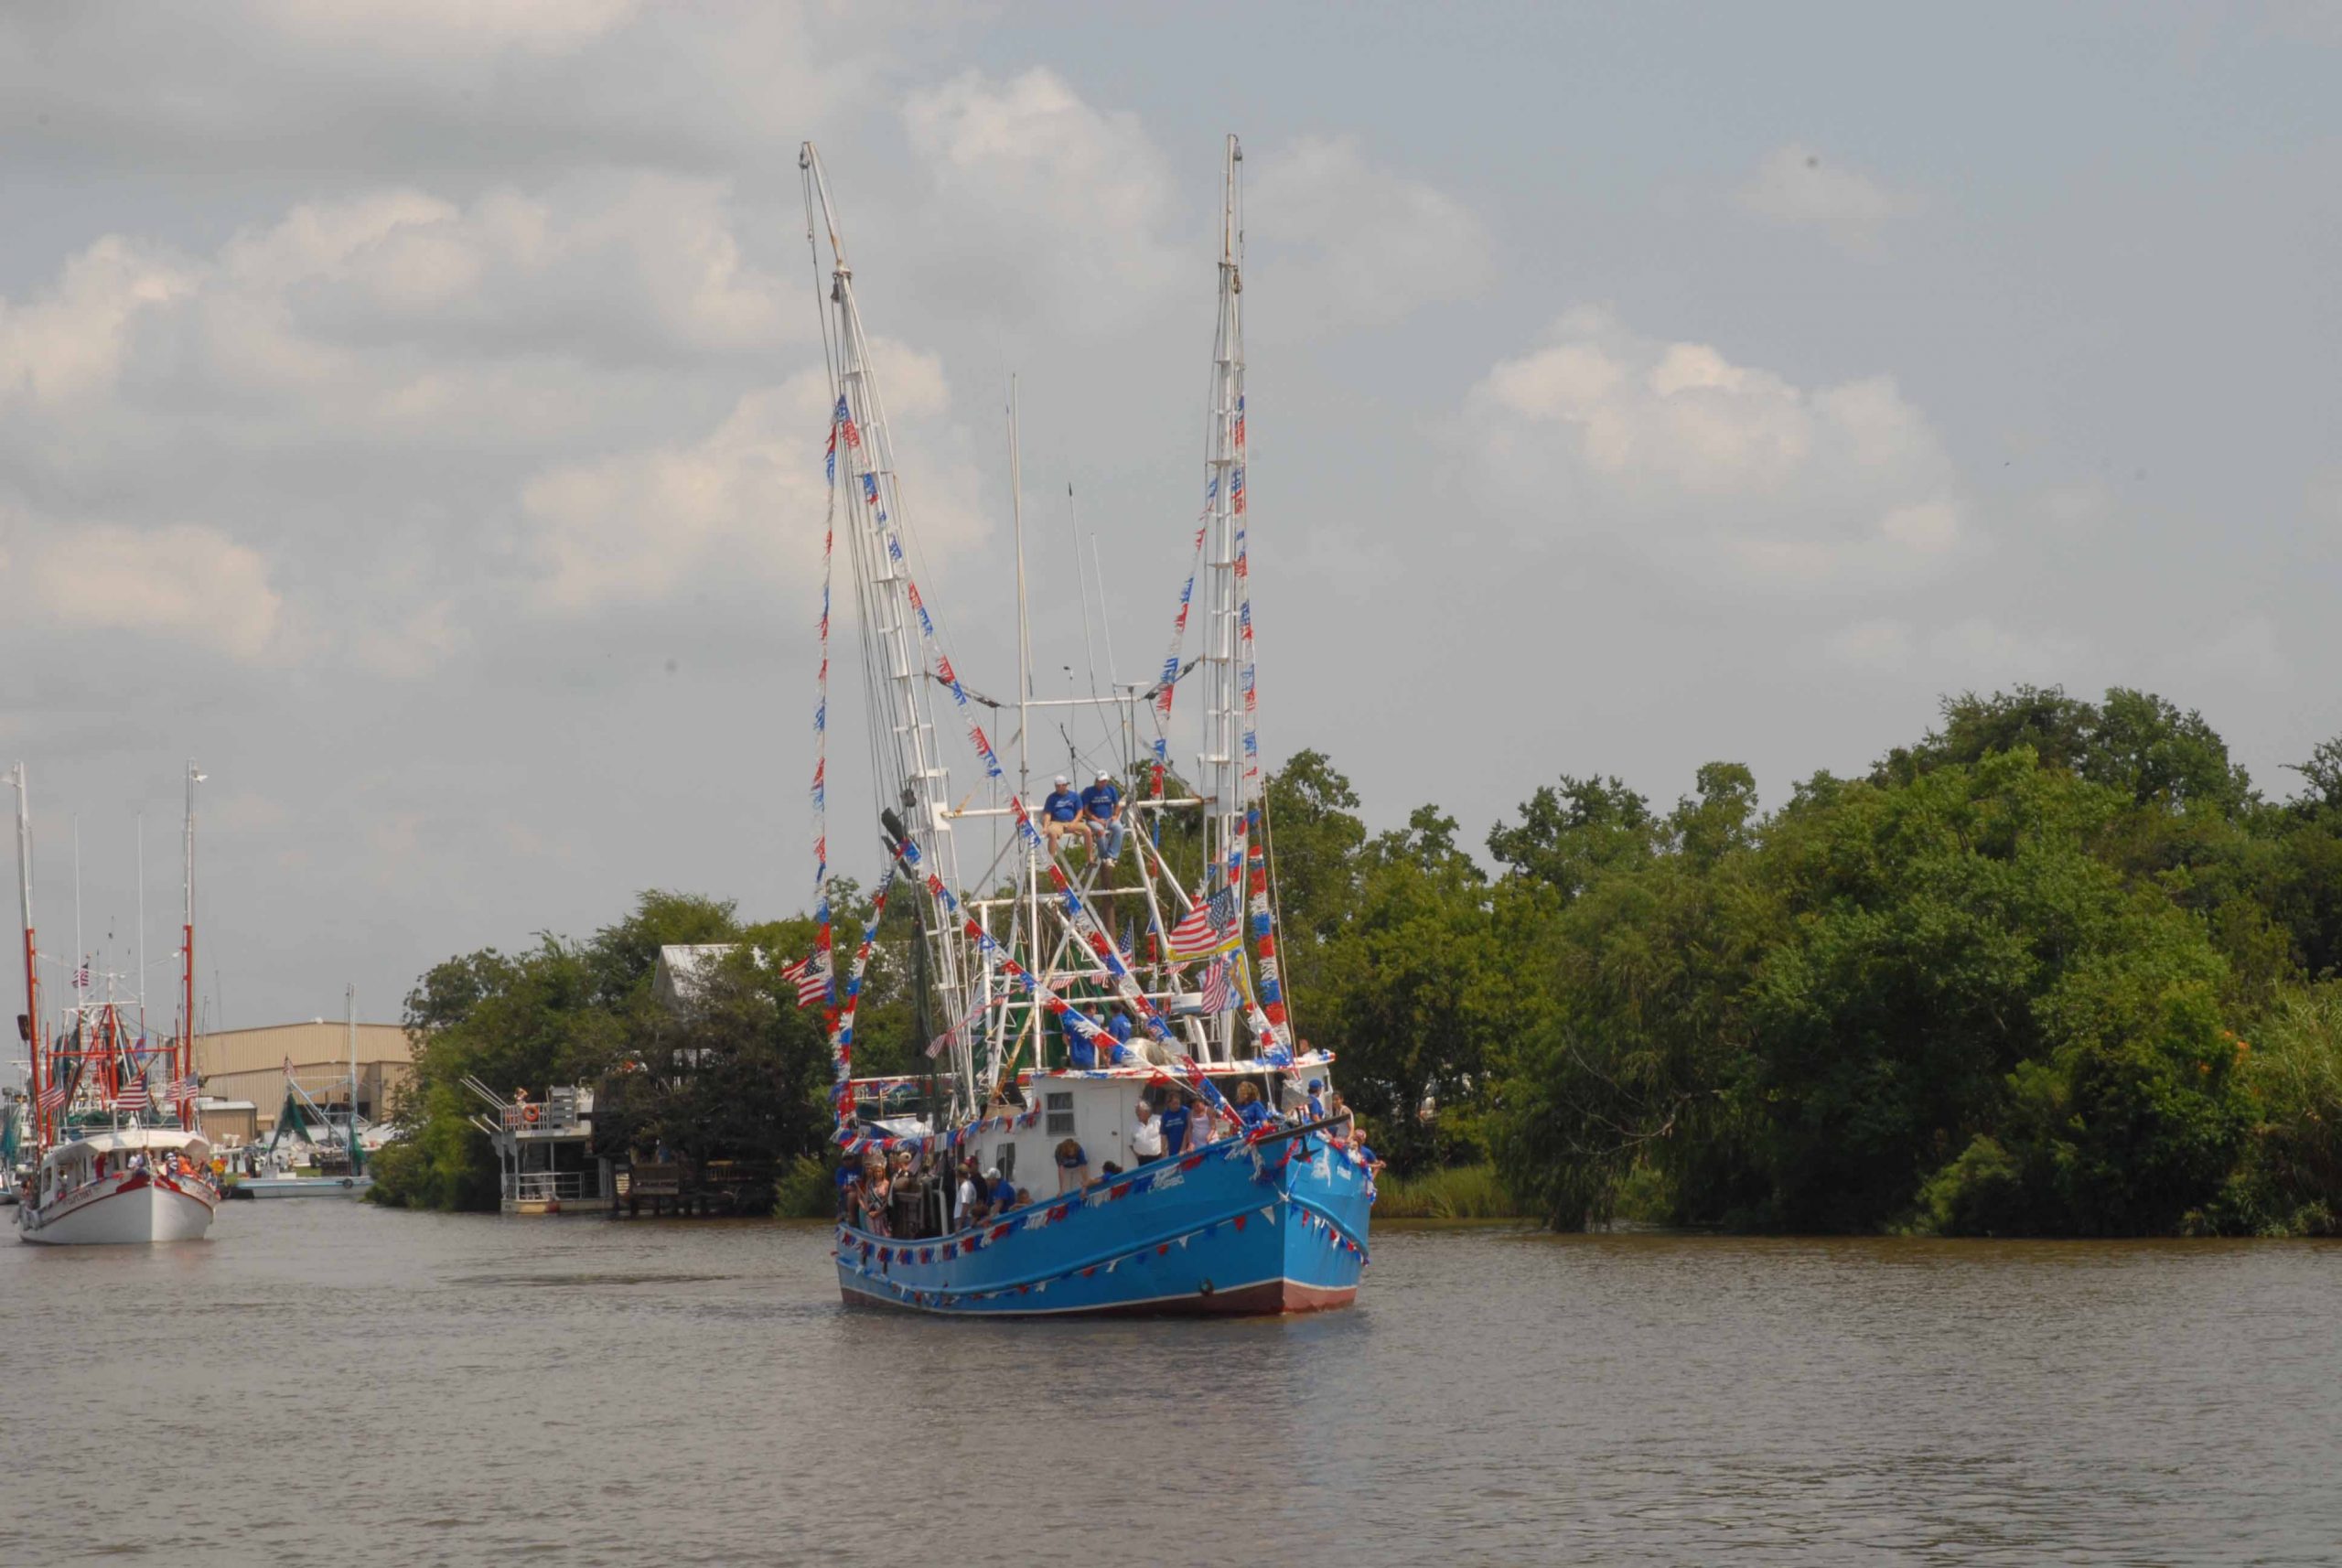 Blue shrimp boat with colorful flags on mast in Iberia Parish, Louisiana